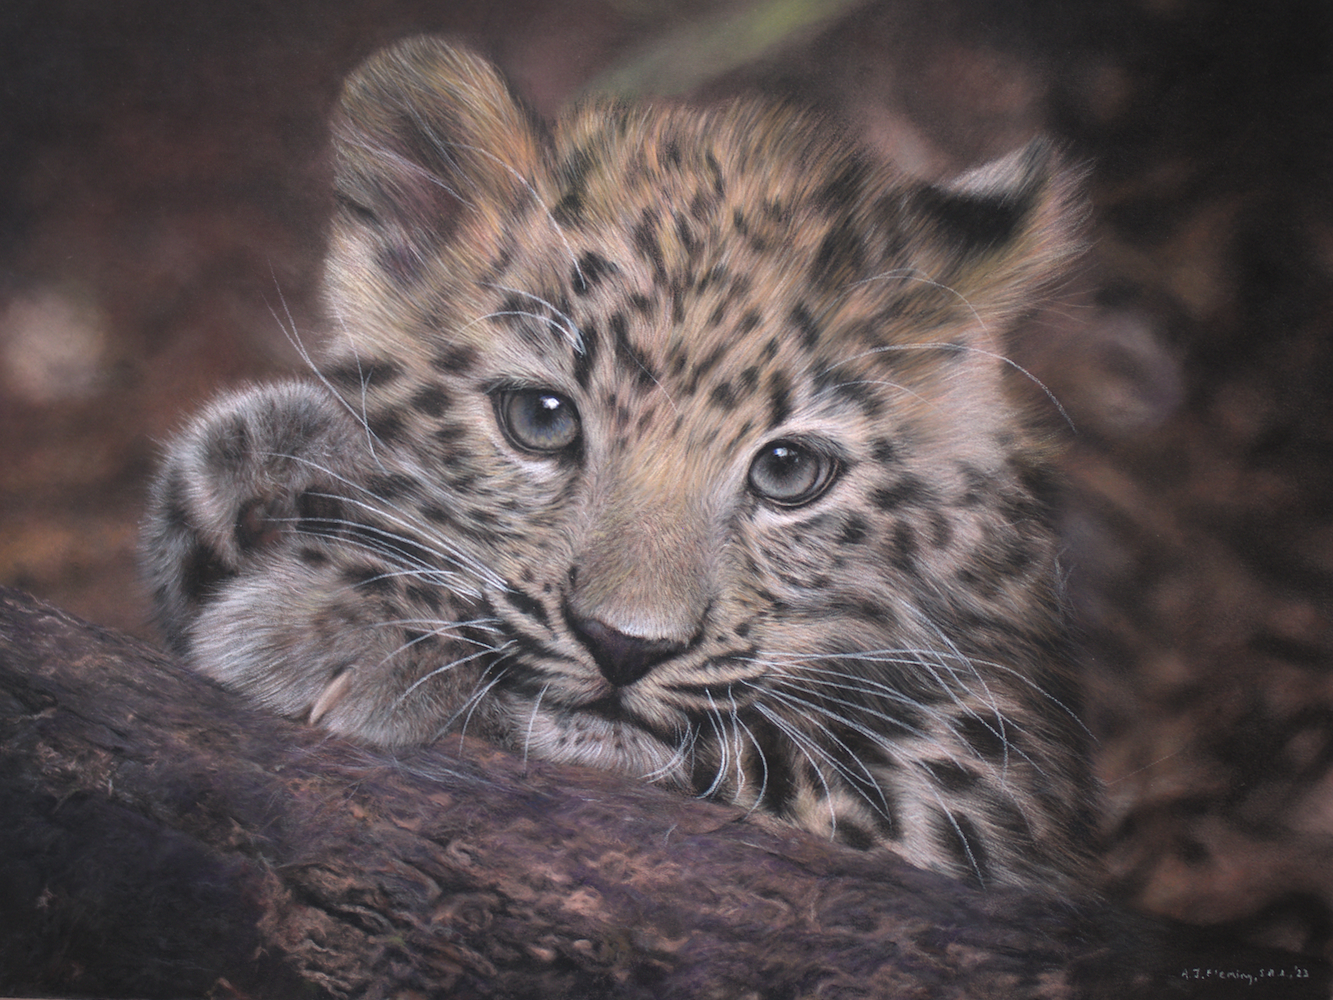 Pastel drawing of an Amur leopard cub